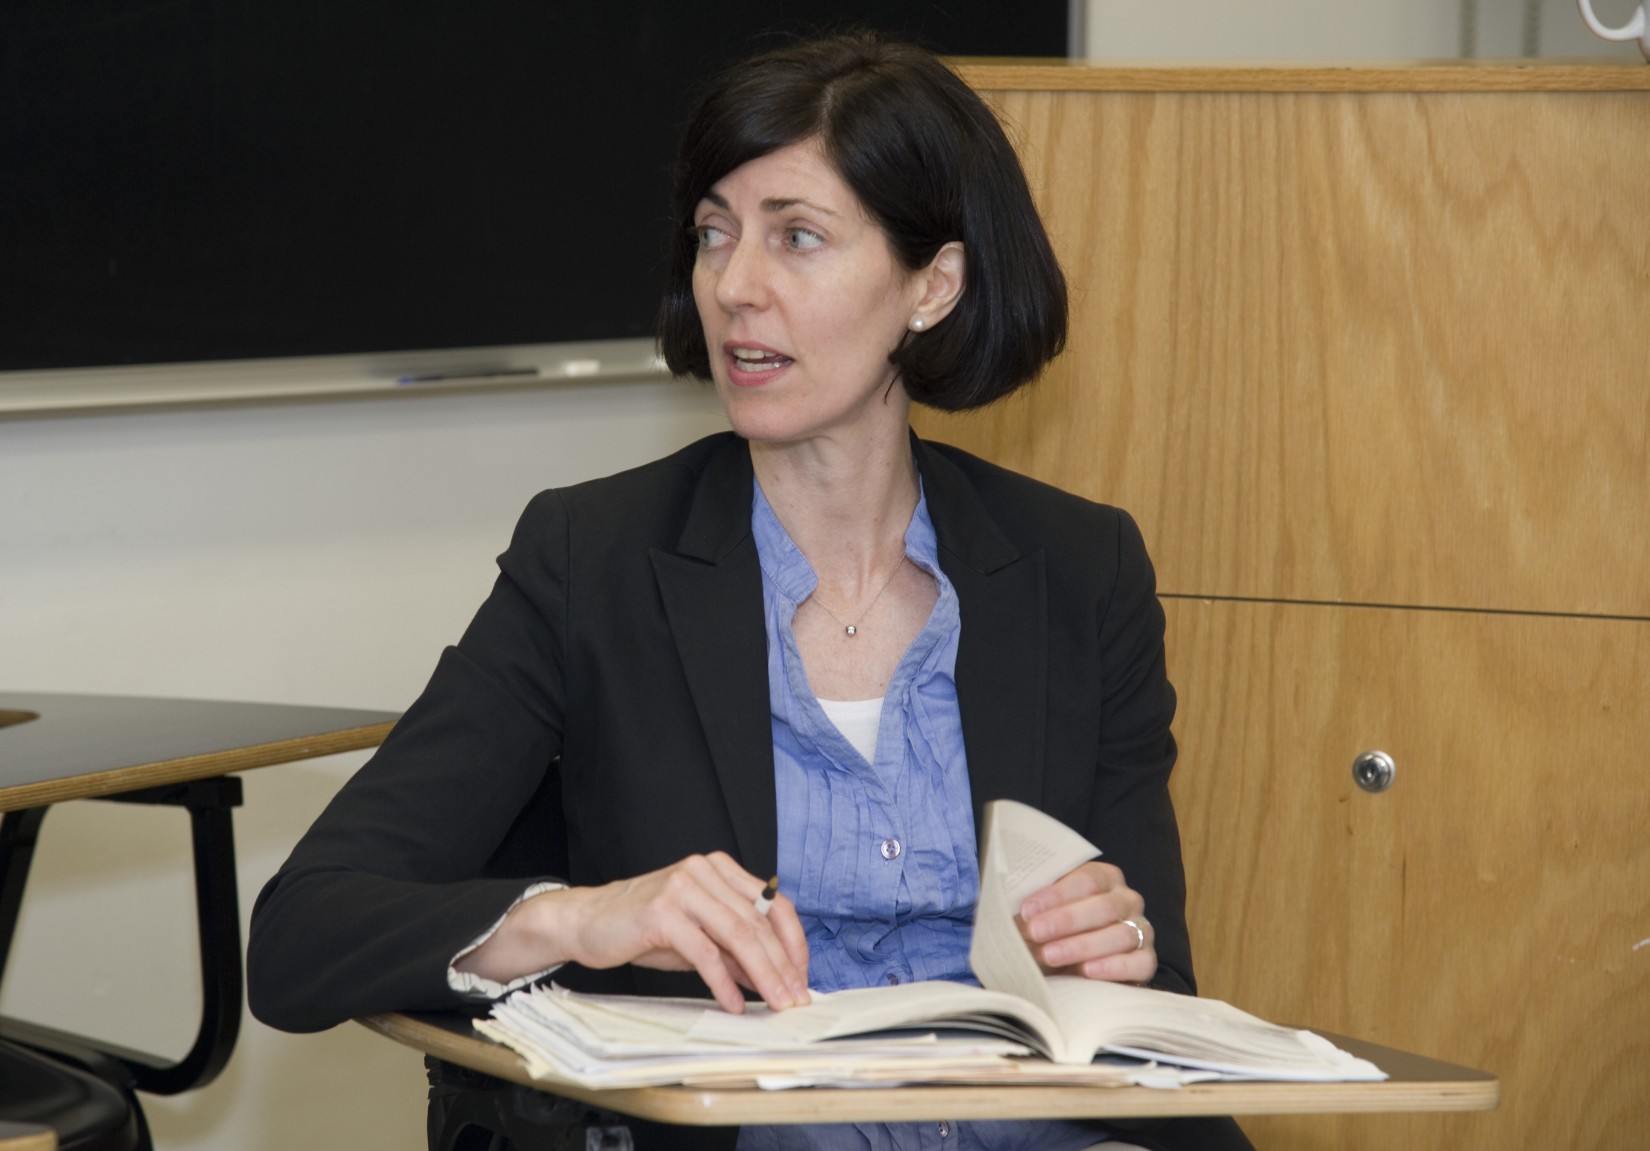 English professor Cecilia Feilla teaches Detective Narratives